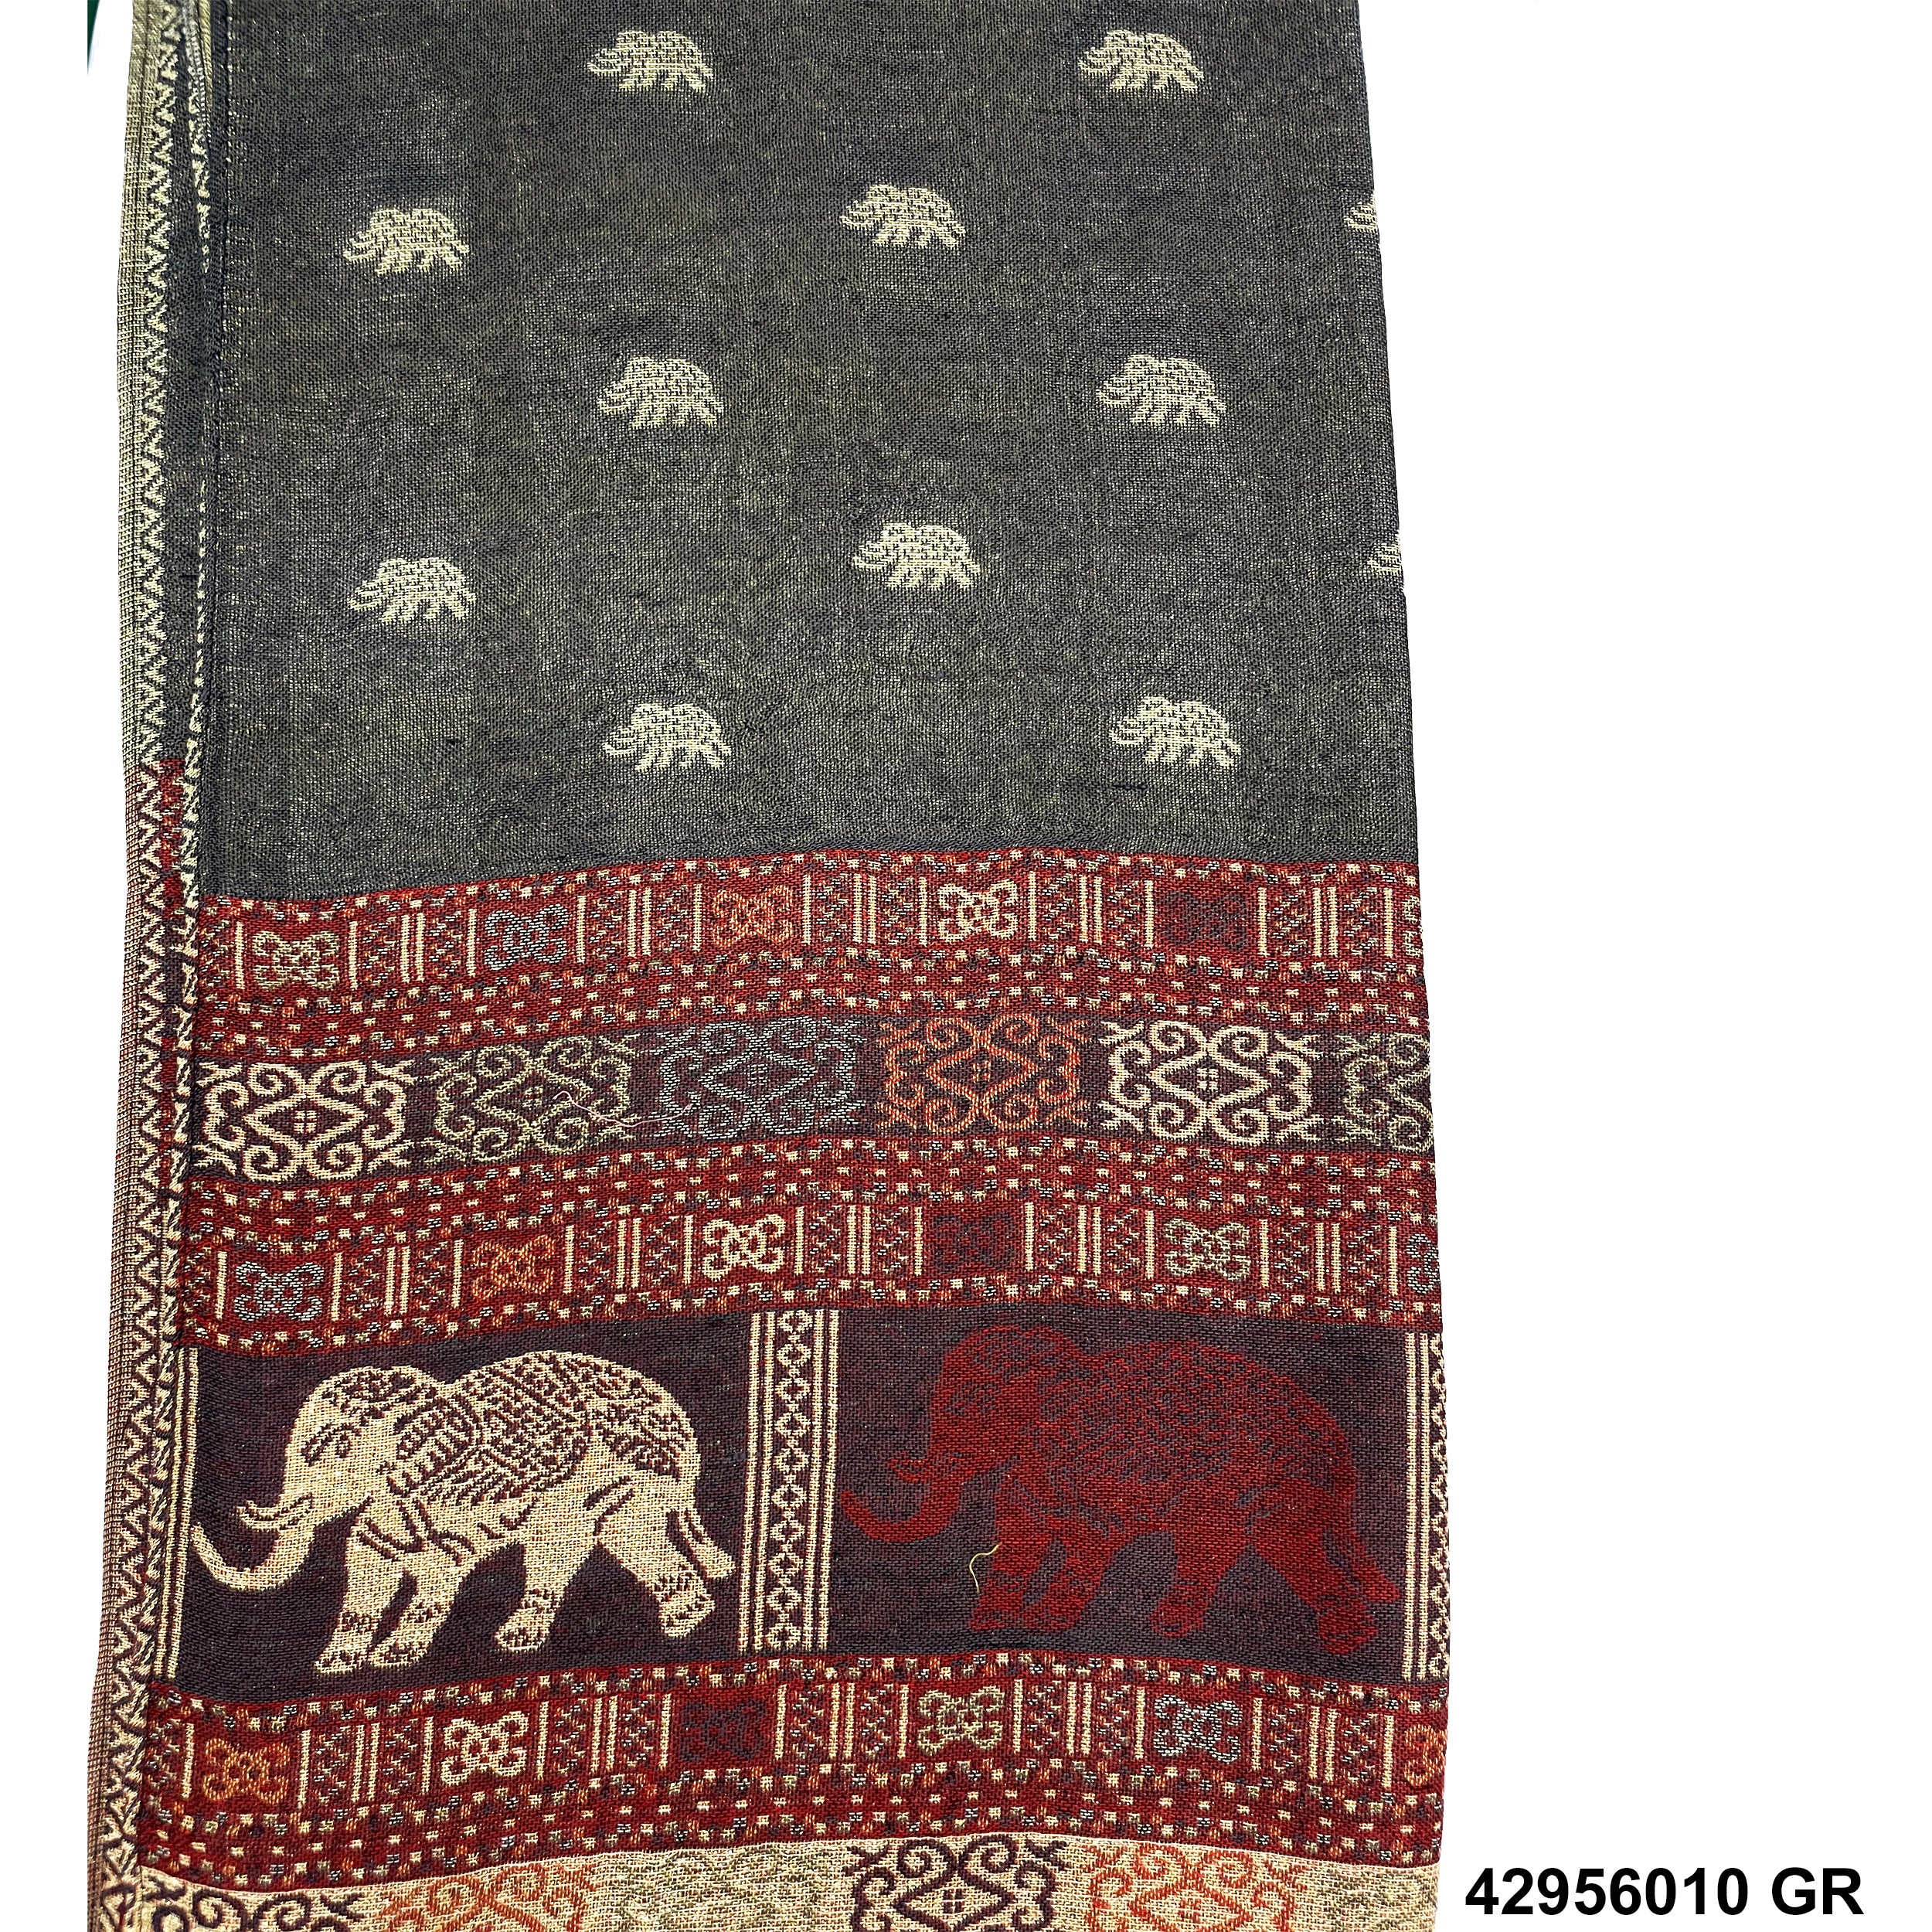 Polyester Fringed Elephant Print Scarf 42956010 GR